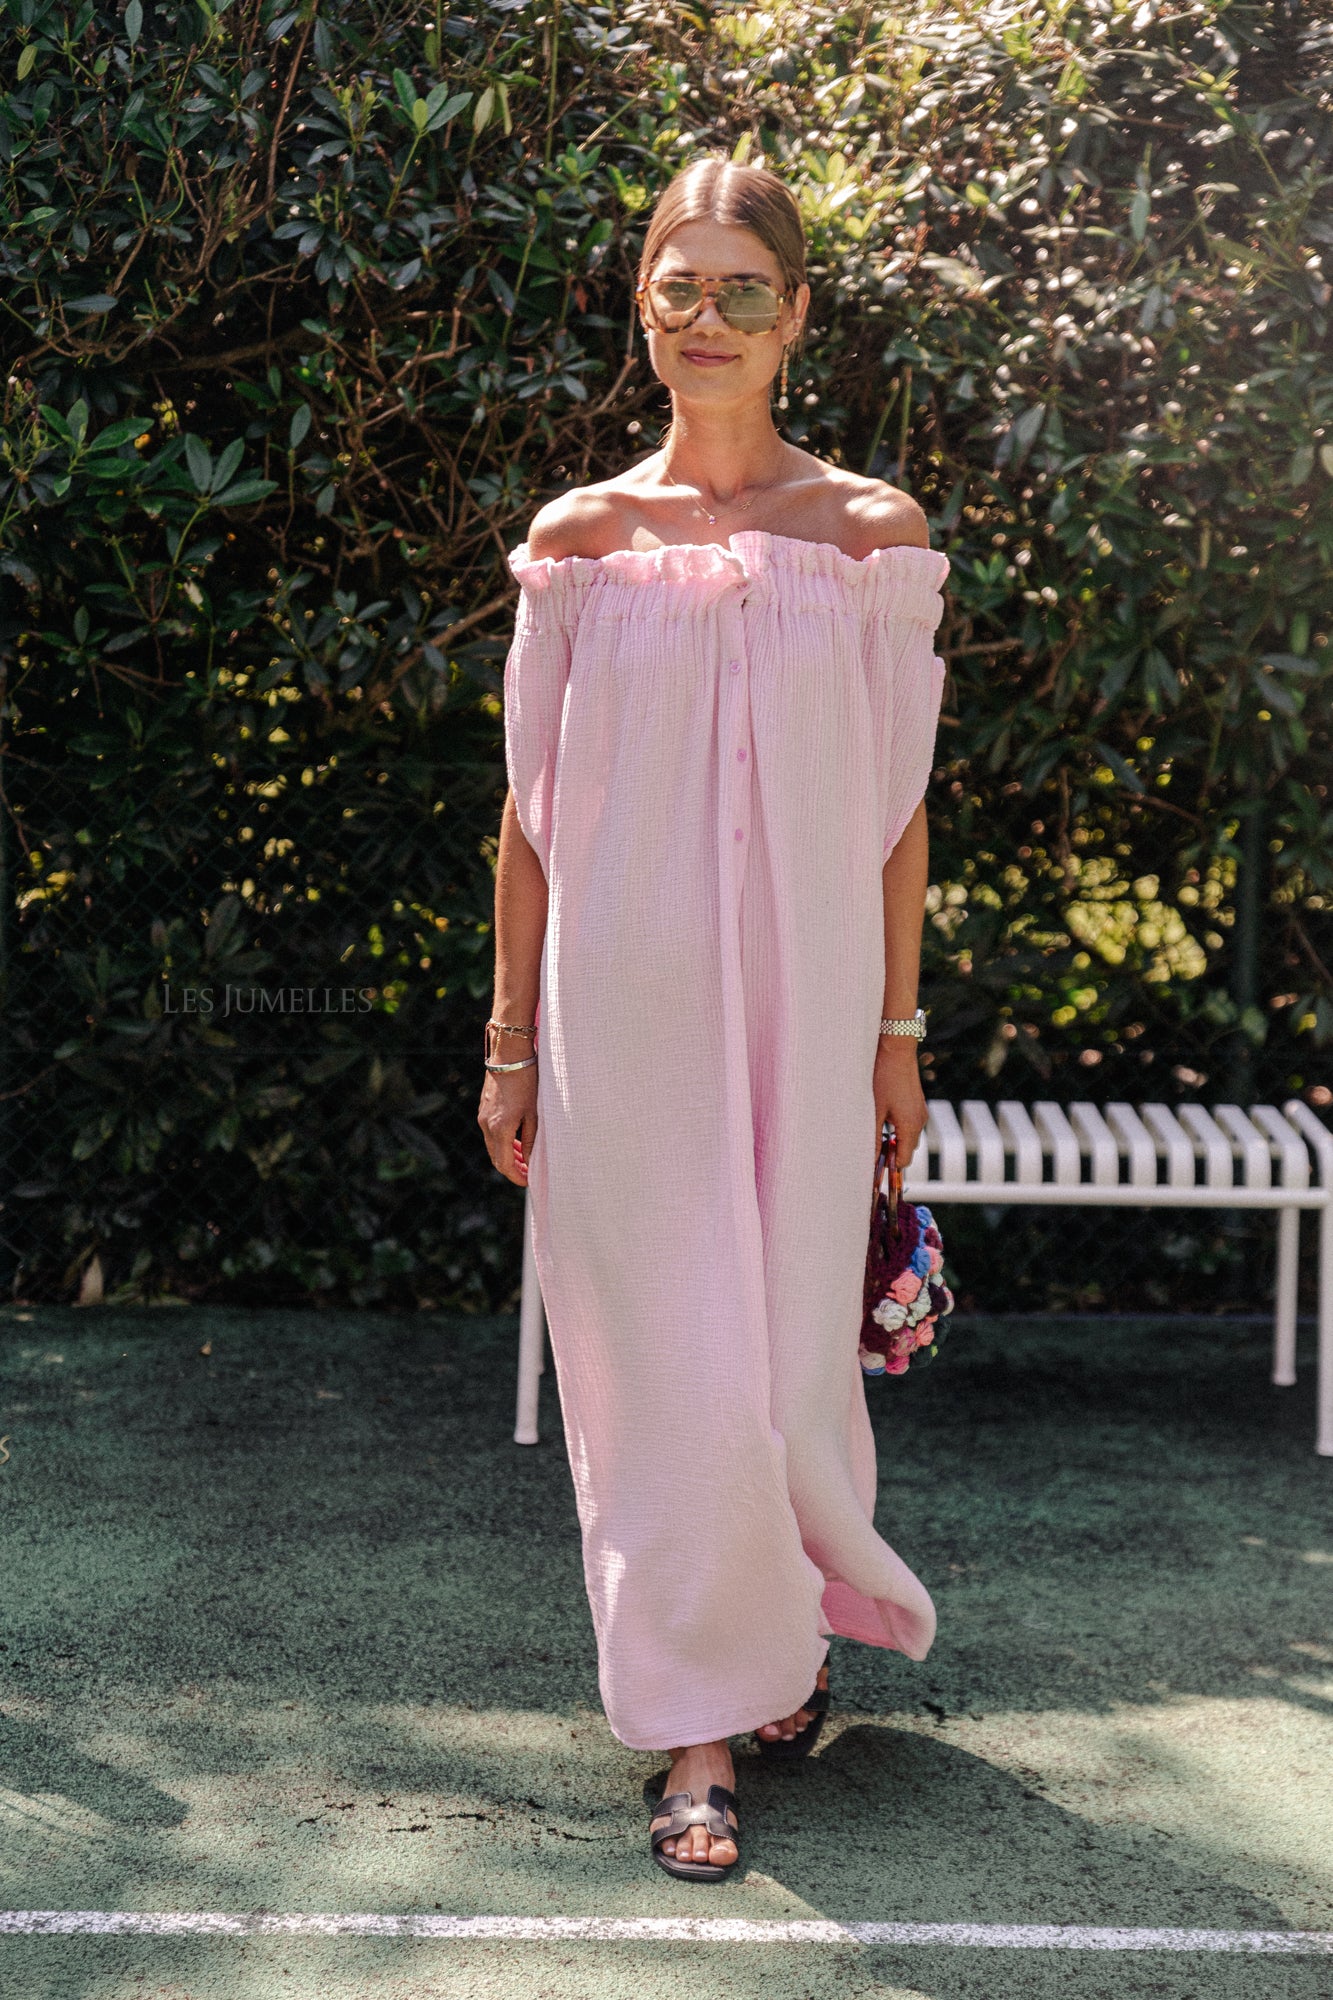 Shari bandeau dress light pink